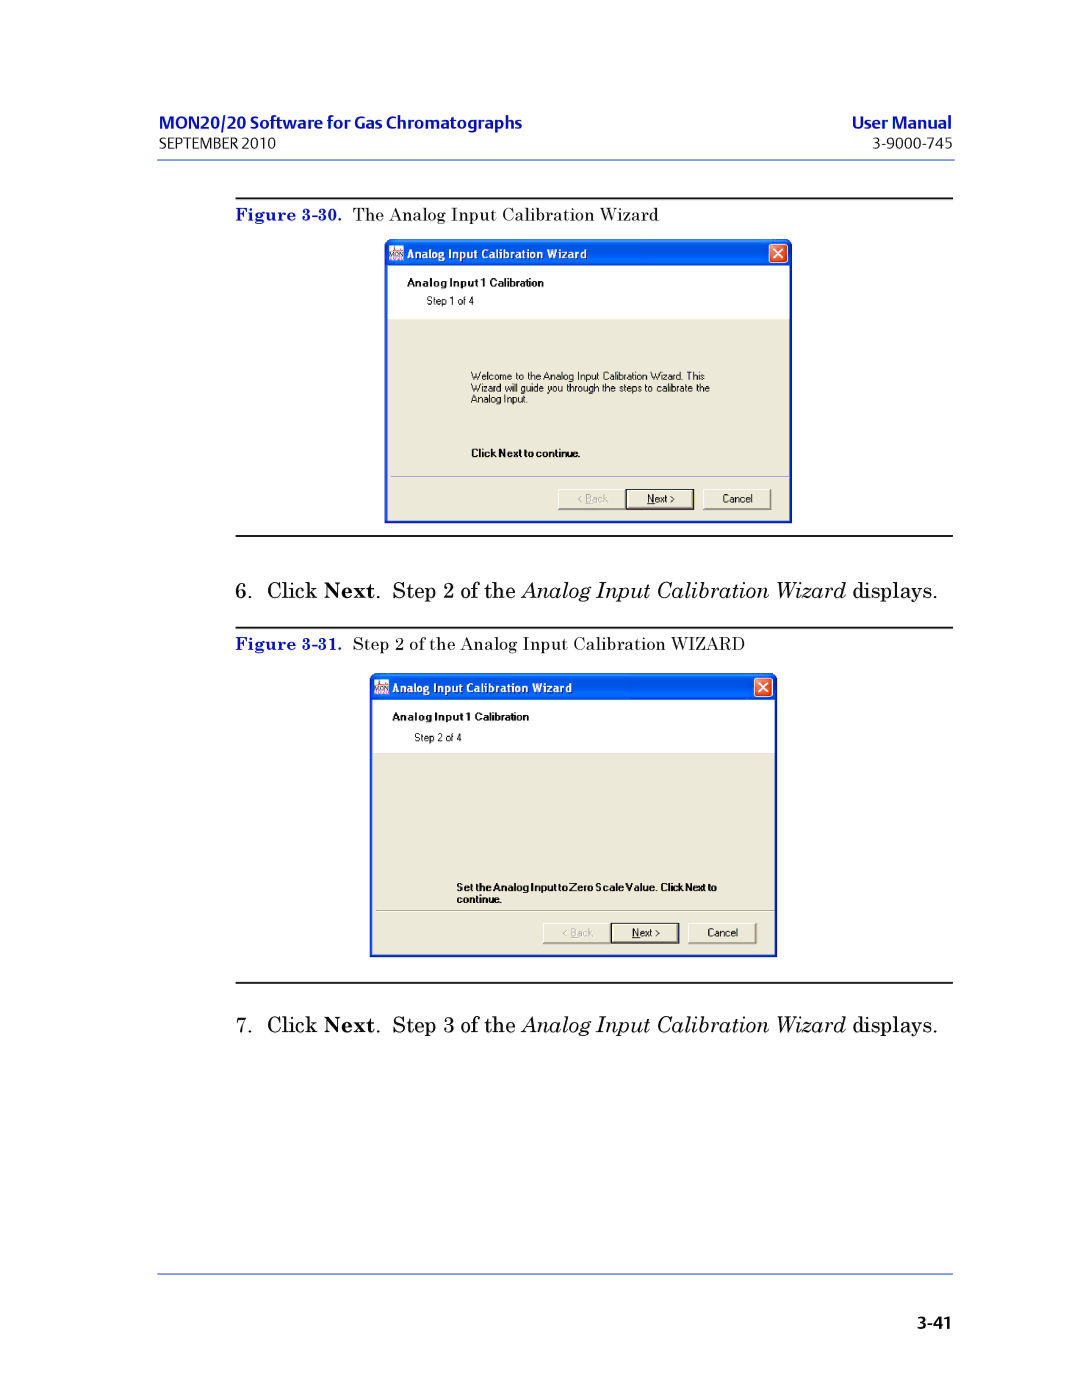 Emerson Process Management 3-9000-745 manual Click Next. of the Analog Input Calibration Wizard displays 